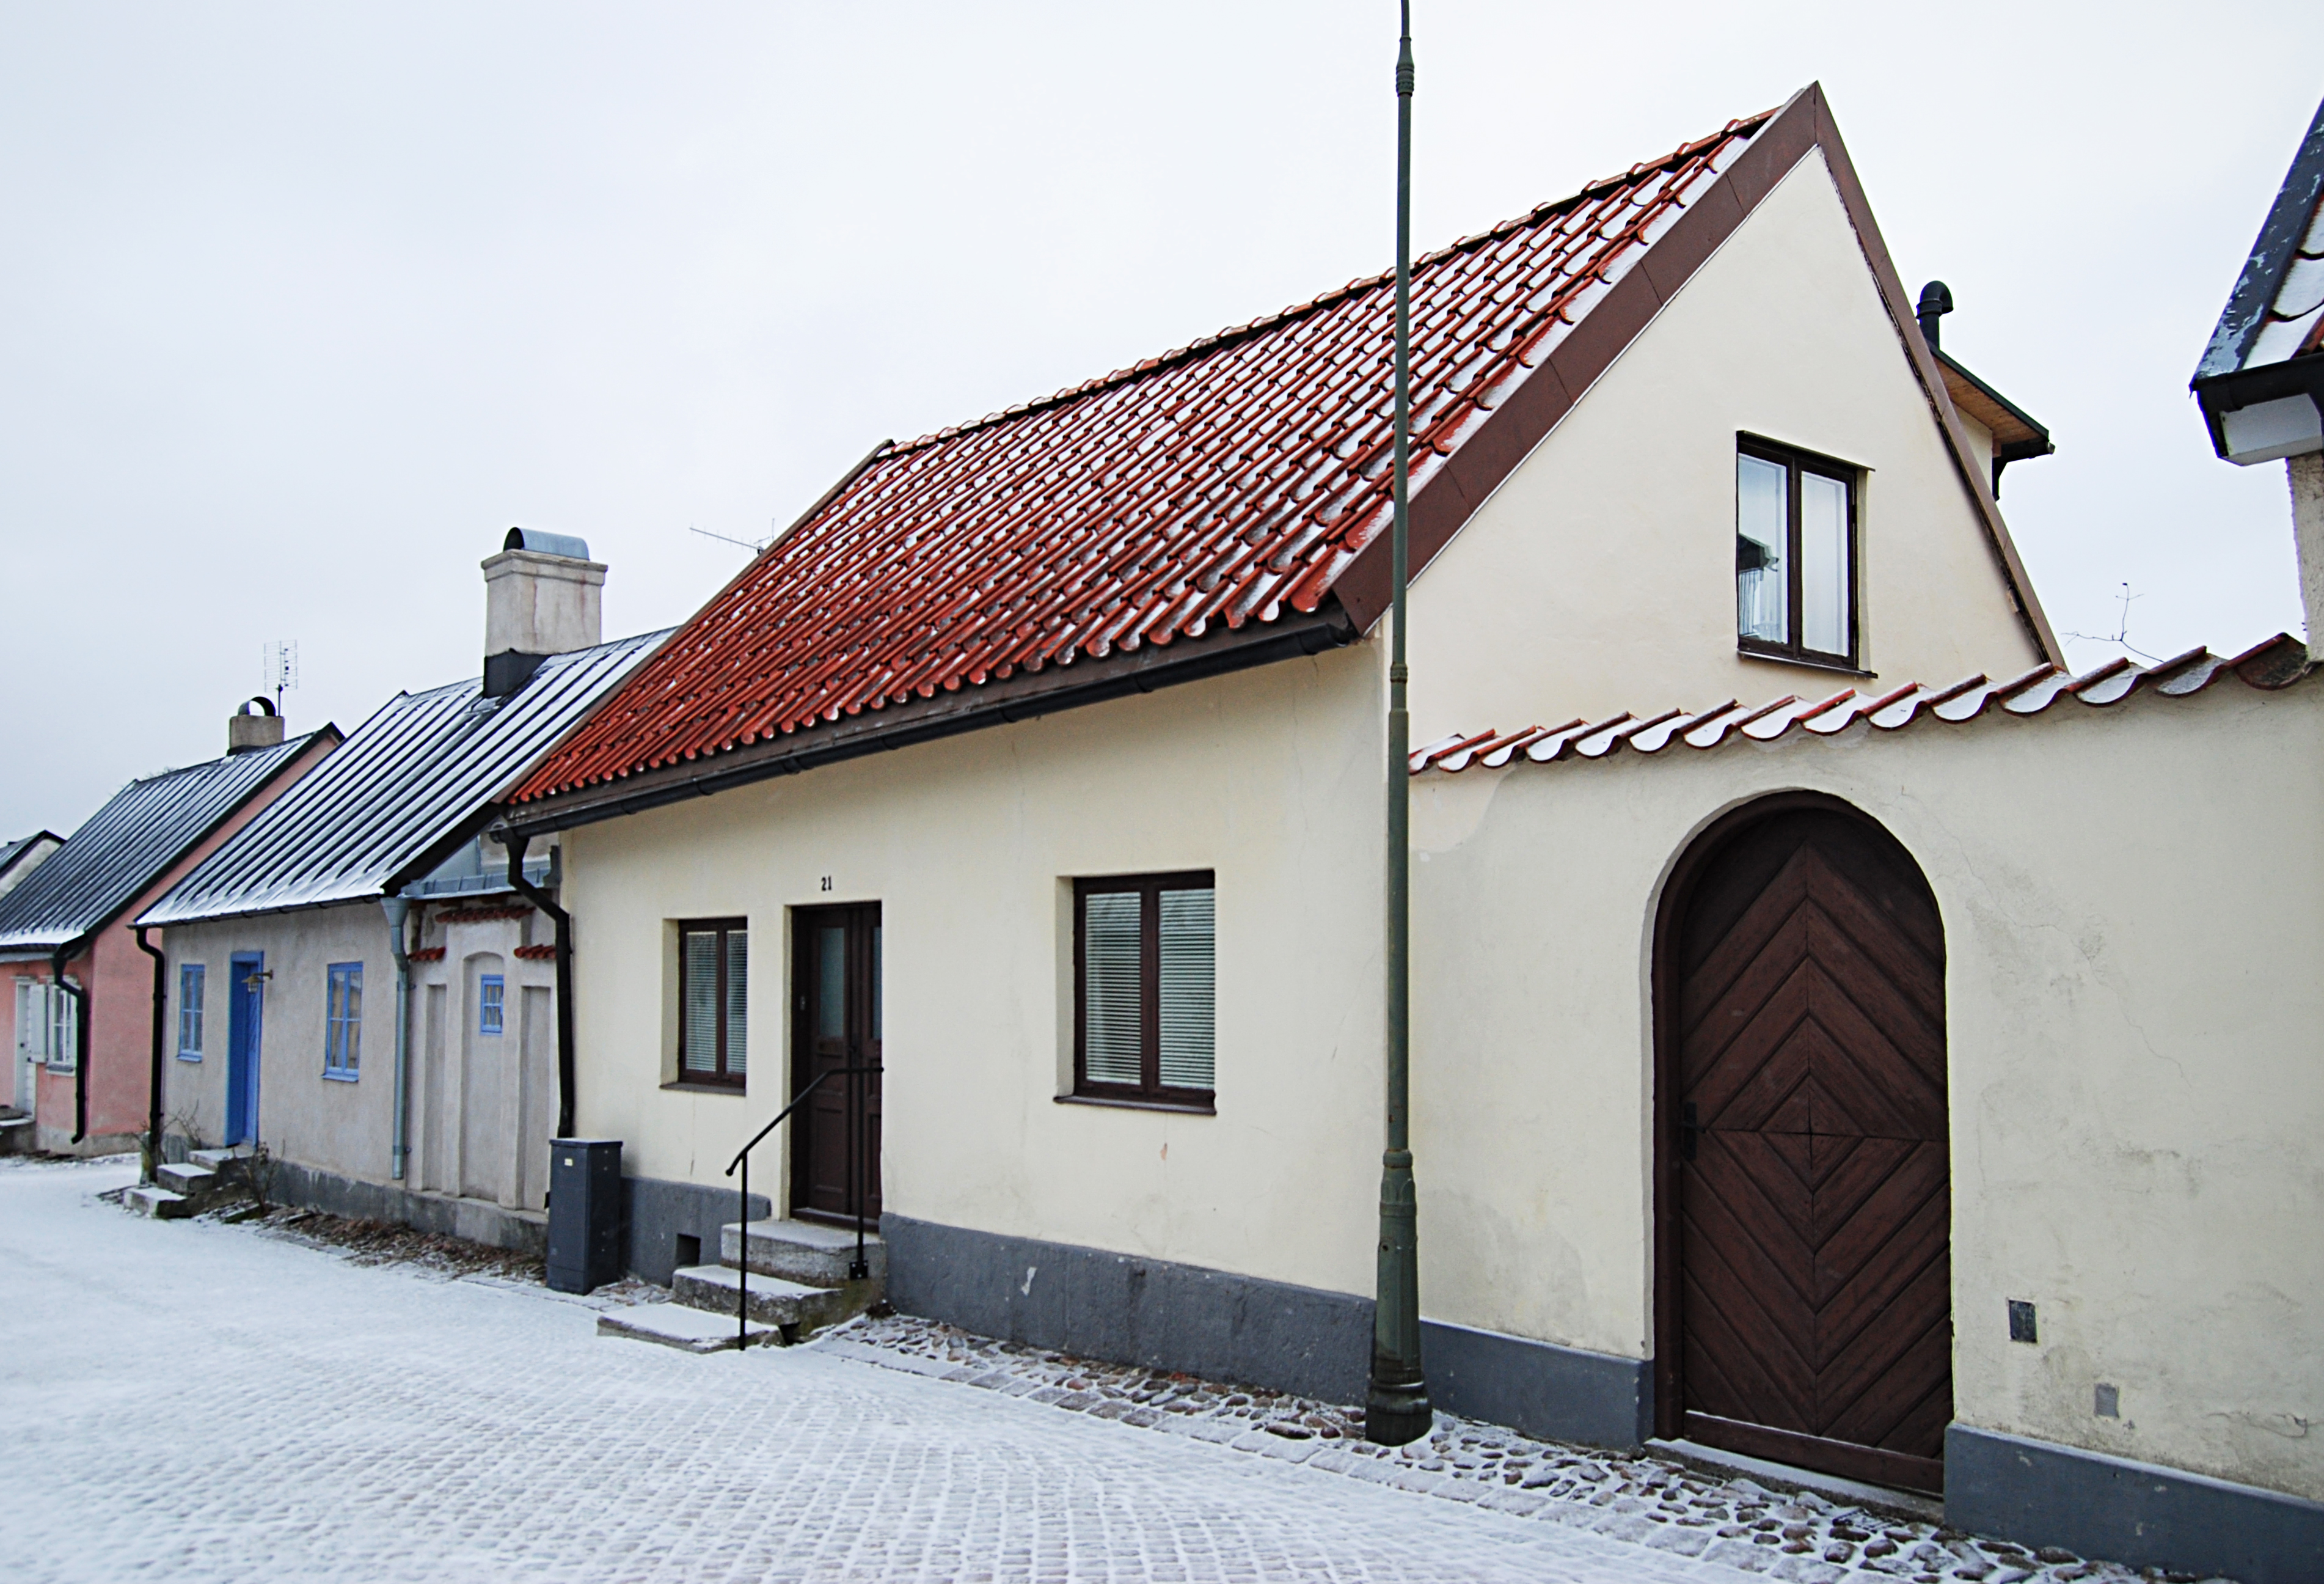 File:Norra Murgatan 21 Låset 5 Visby Gotland.jpg - Wikimedia Commons